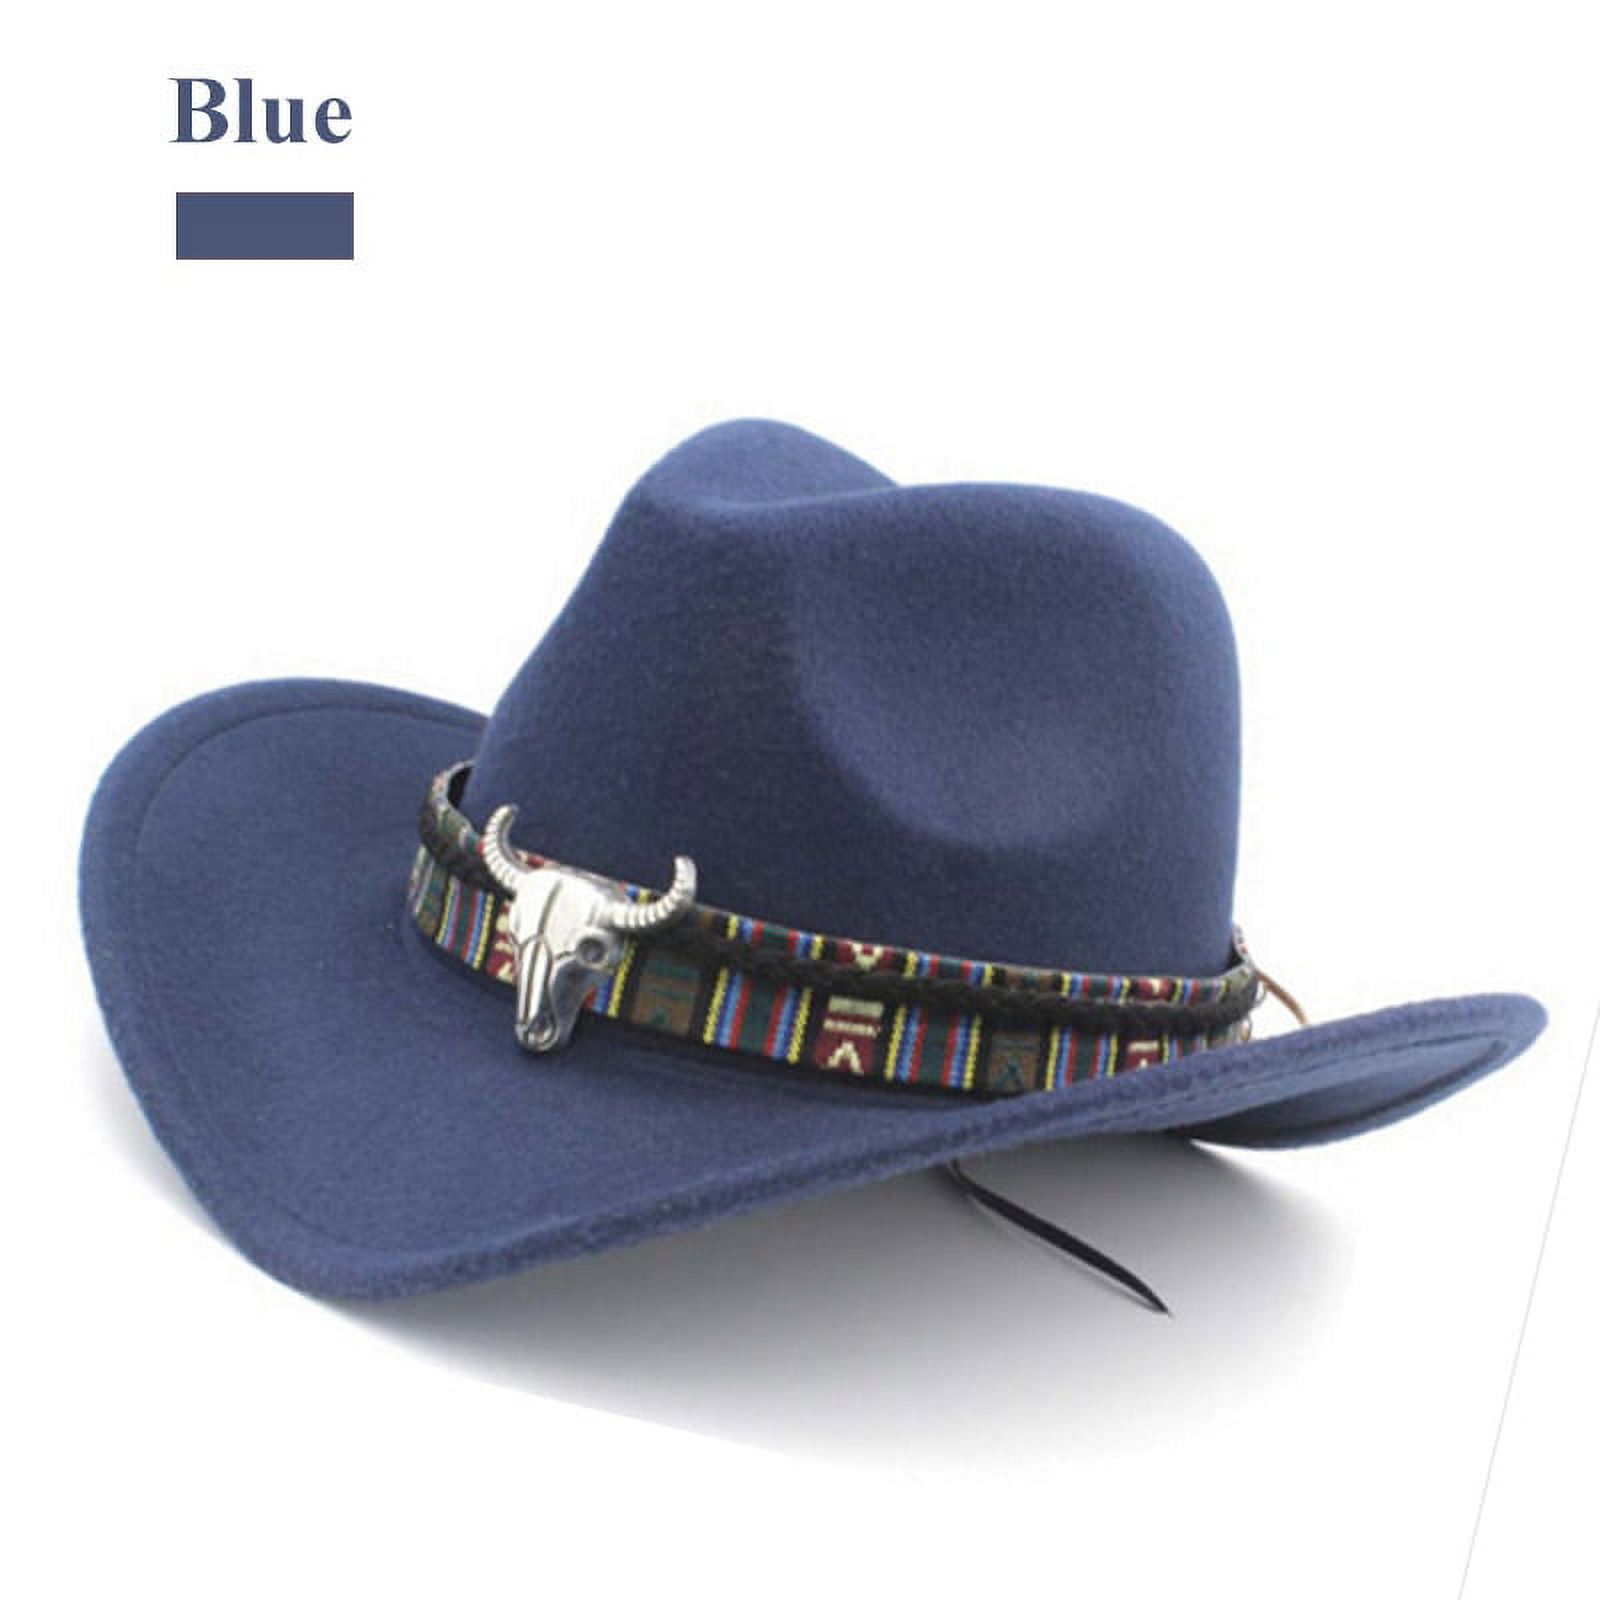 Topwoner 2020New Ethnic Style Western Cowboy Hat Women's Wool Hat Jazz Hat Western Cowboy Hat - image 3 of 6